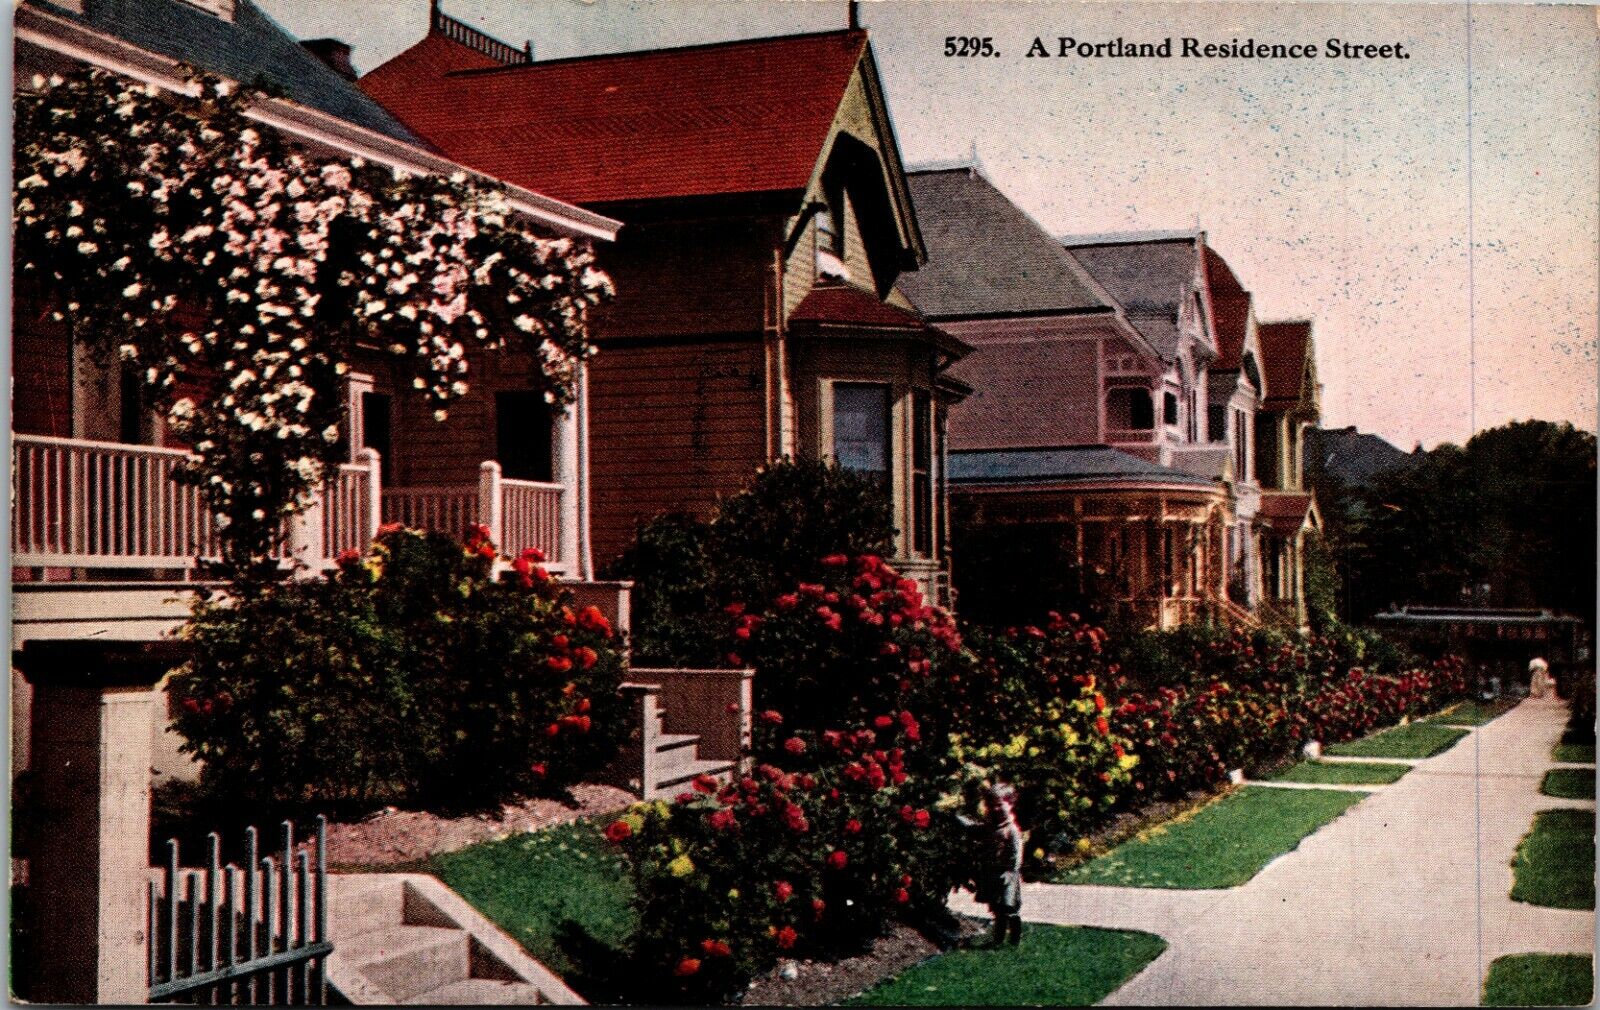 A Portland Residence Street Cottages Roses Paper Damage DB OR Postcard 